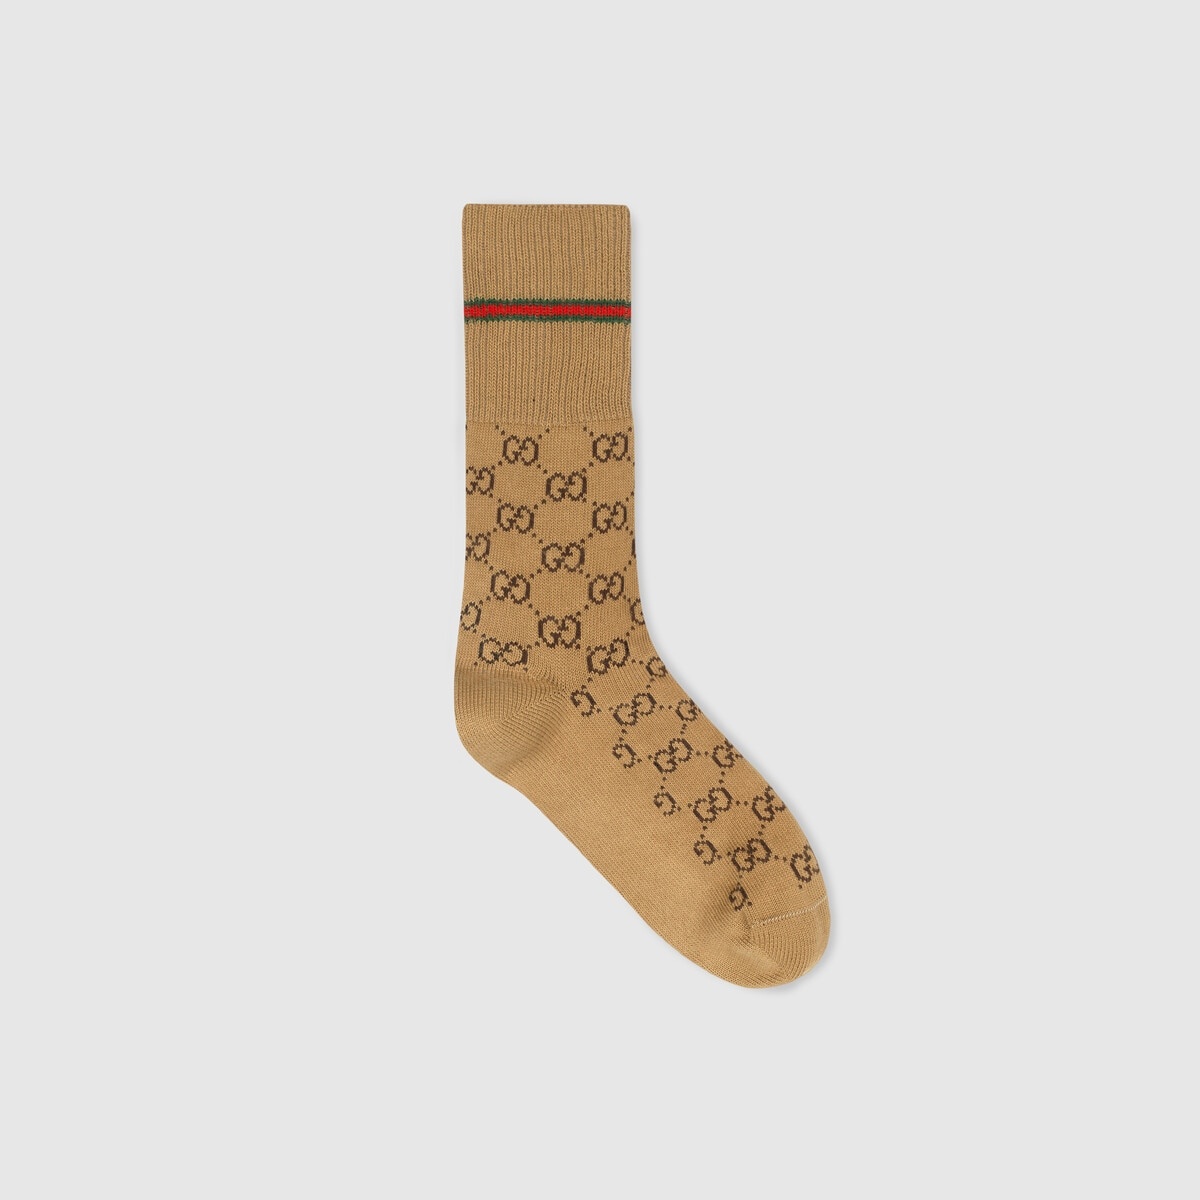 GG cotton socks with Web - 1